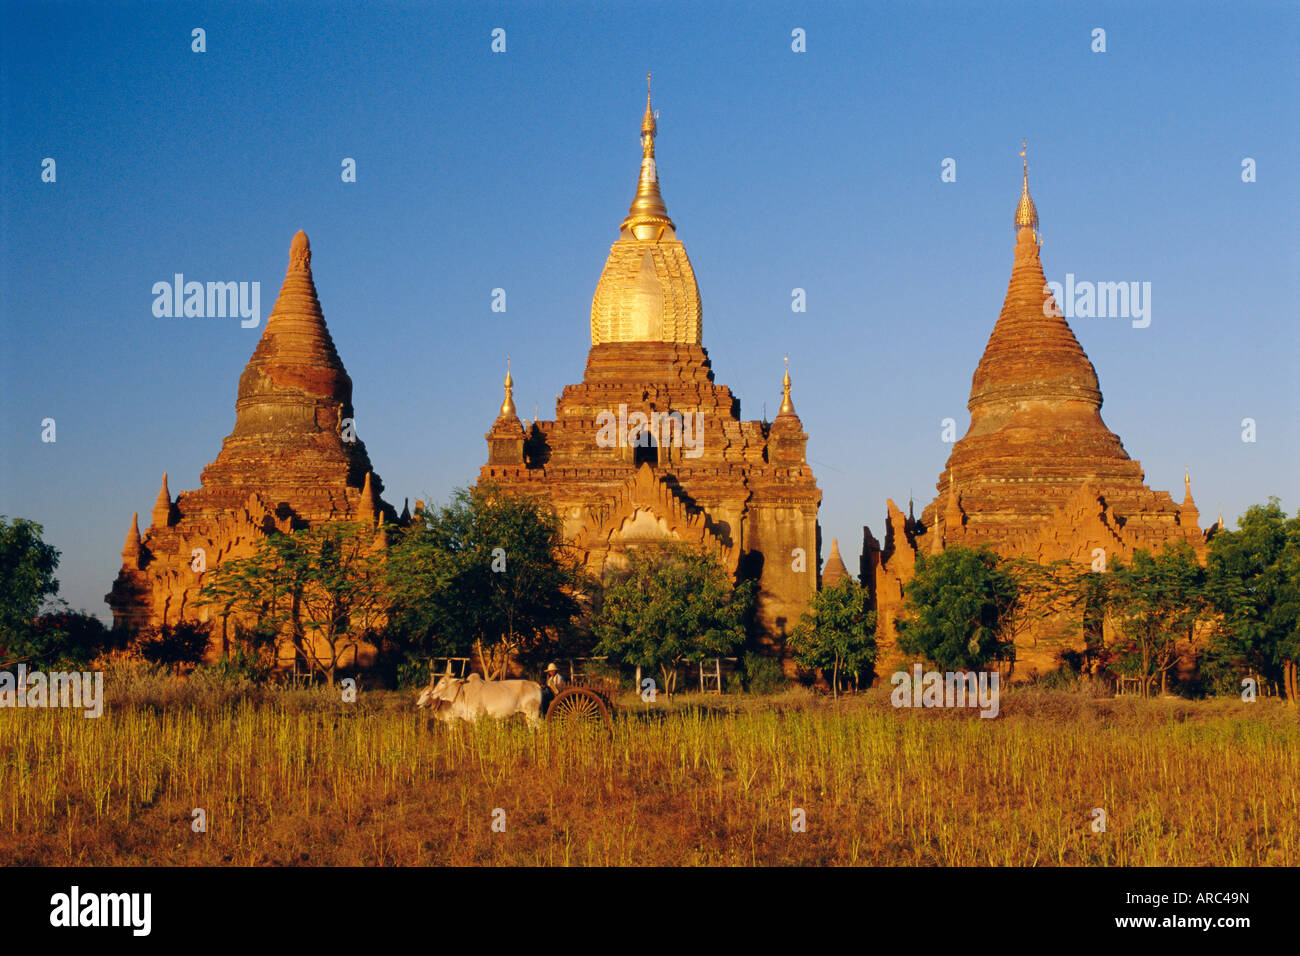 Golden spire on ancient temple in old Bagan (Pagan), Myanmar (Burma) Stock Photo